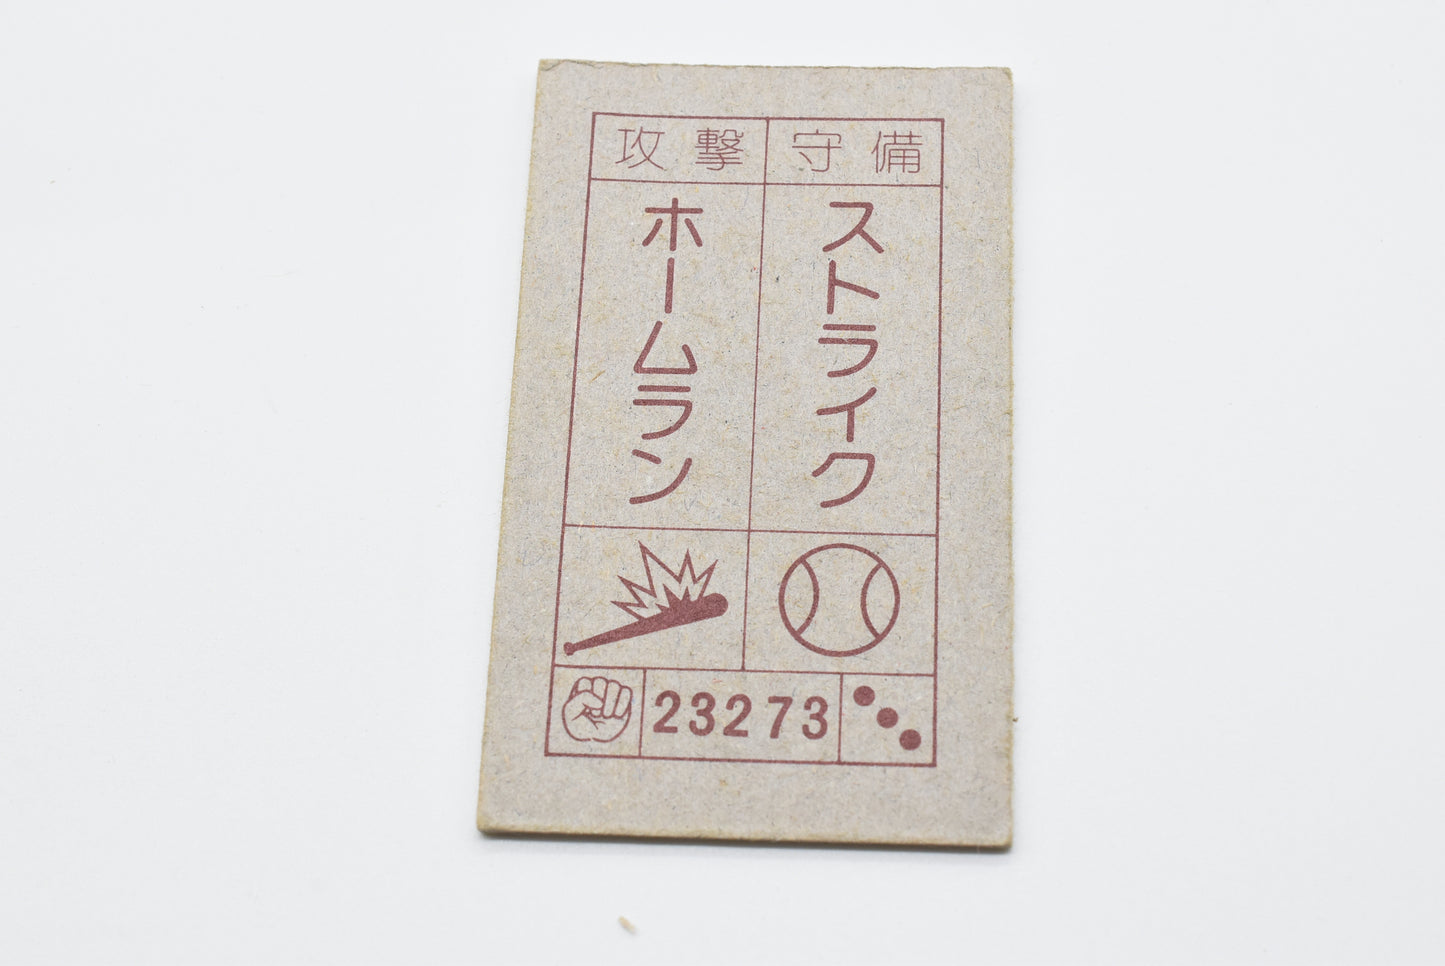 Japan Anime KINNIKUMAN menko card Kinnikuman retro vintage major scratches and dirt #0011